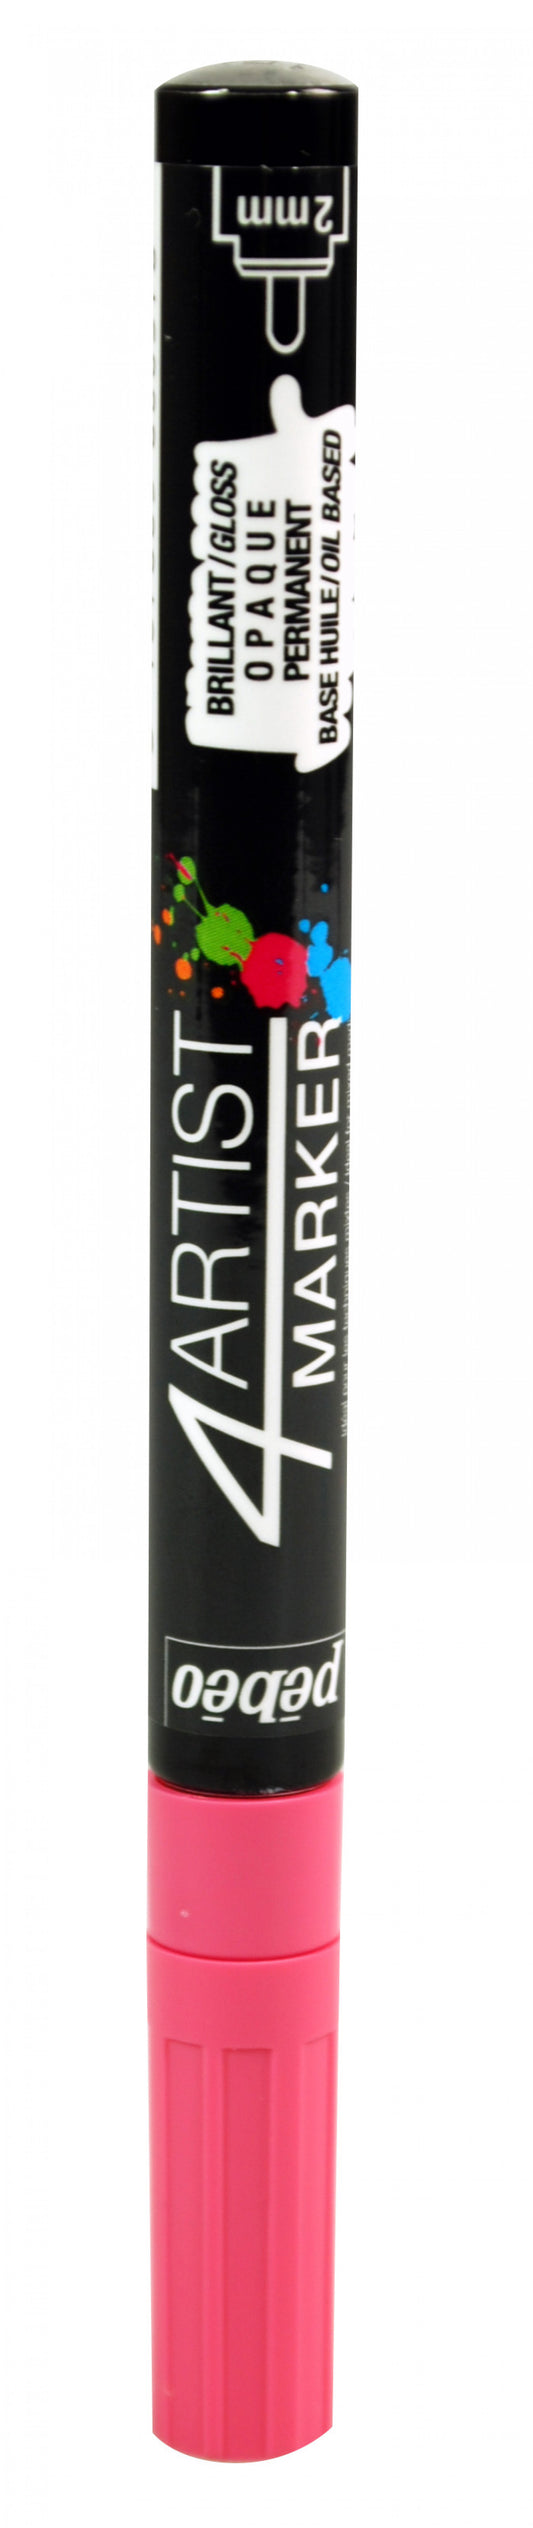 Stylo marqueur 4Artist, pointe 2 mm, rose